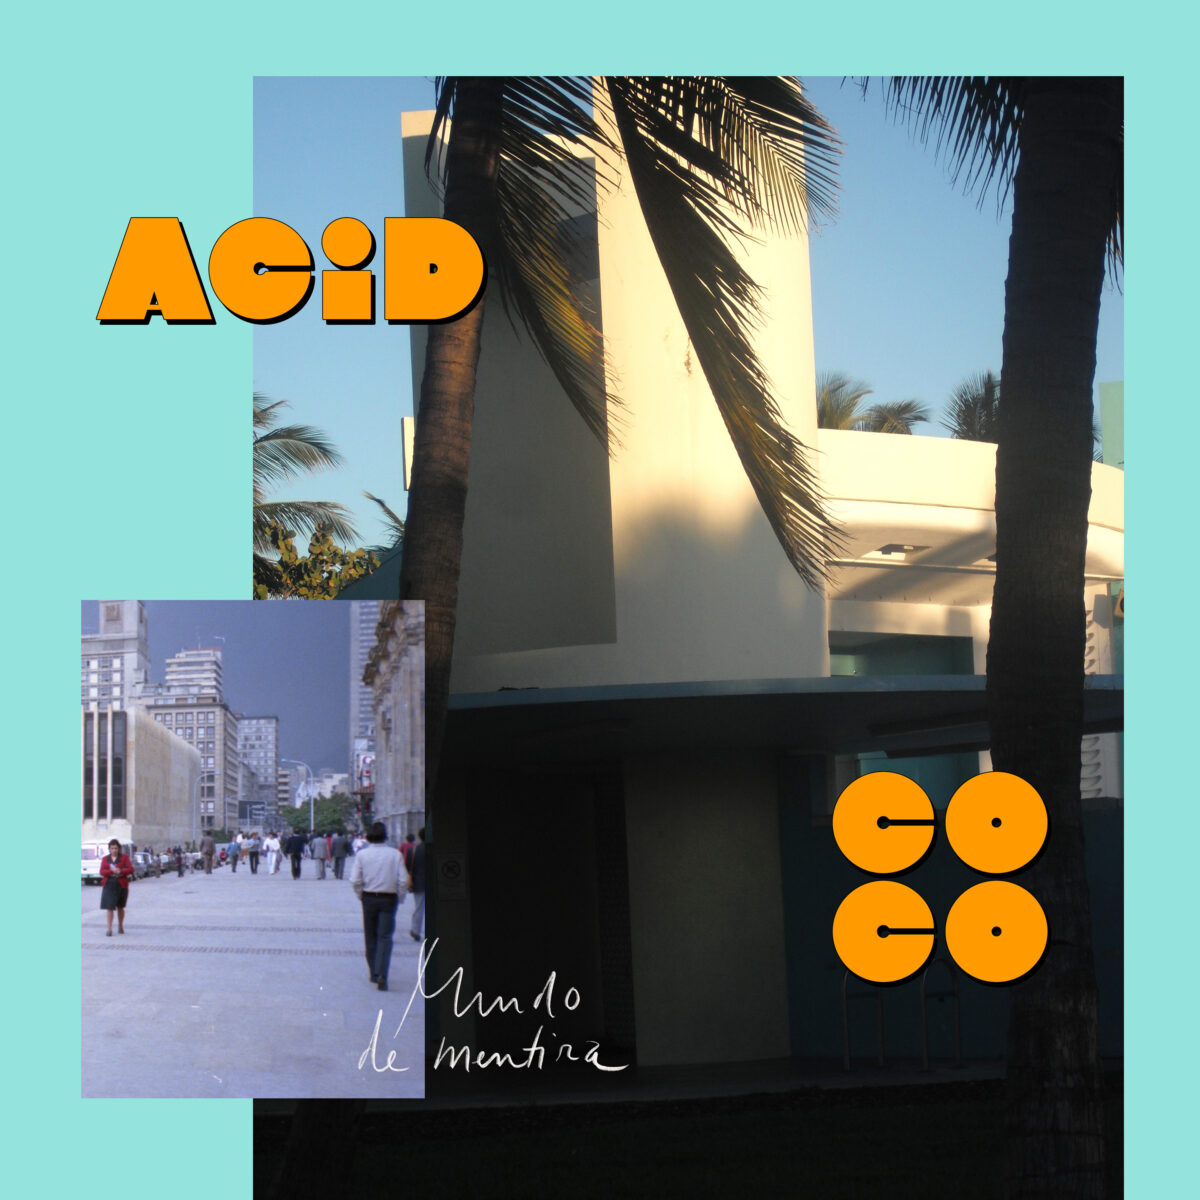 acid coco presenta mundo de mentira unnamed 3